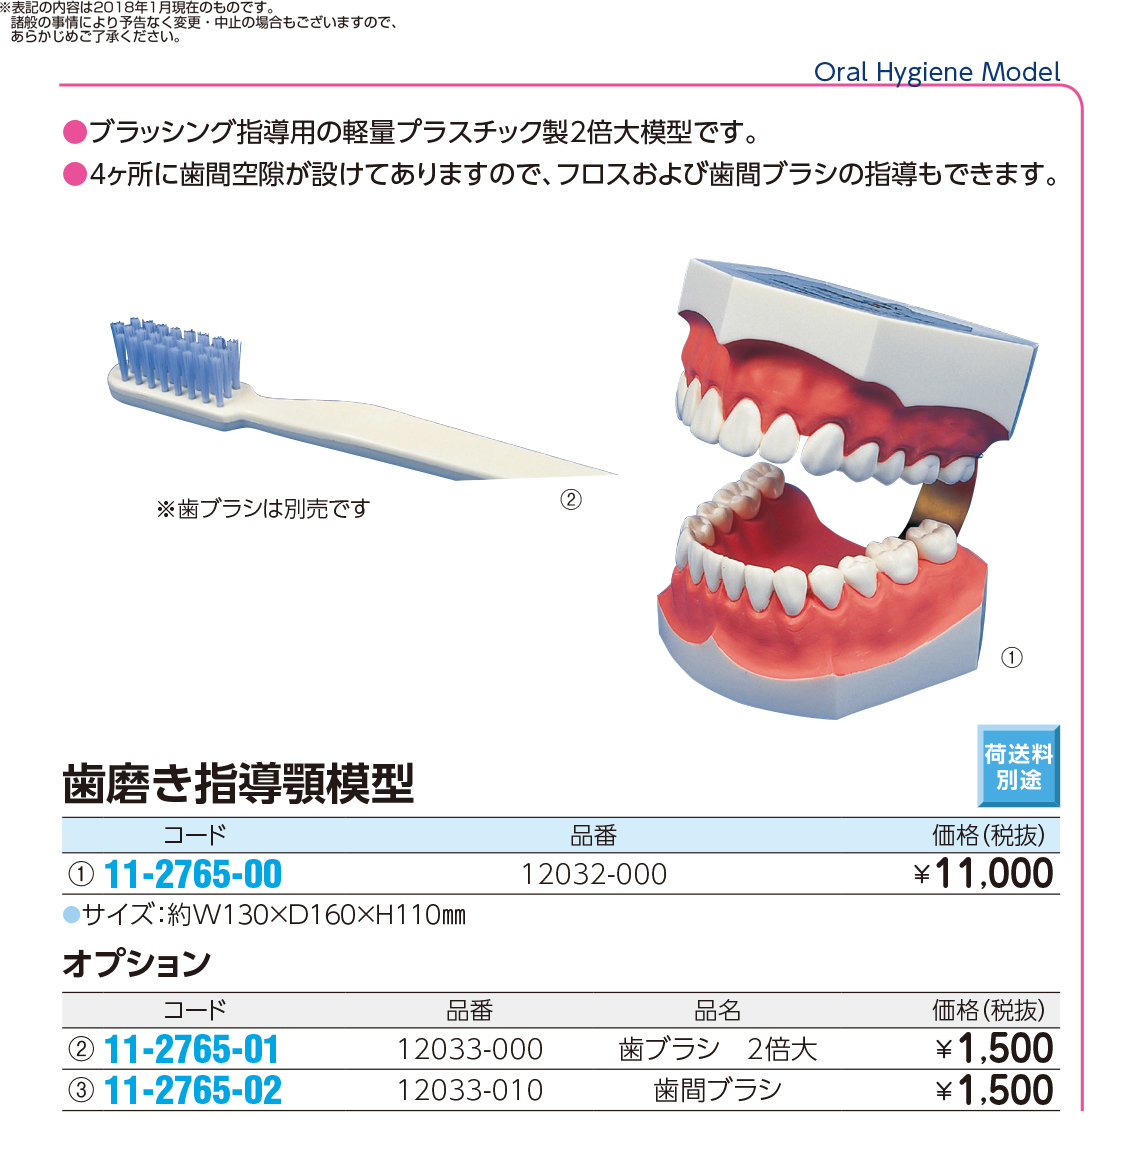 (11-2765-00)２倍大歯磨き指導用模型 12032-000(NNS3) ﾊﾐｶﾞｷｼﾄﾞｳﾓｹｲ(京都科学)【1台単位】【2018年カタログ商品】